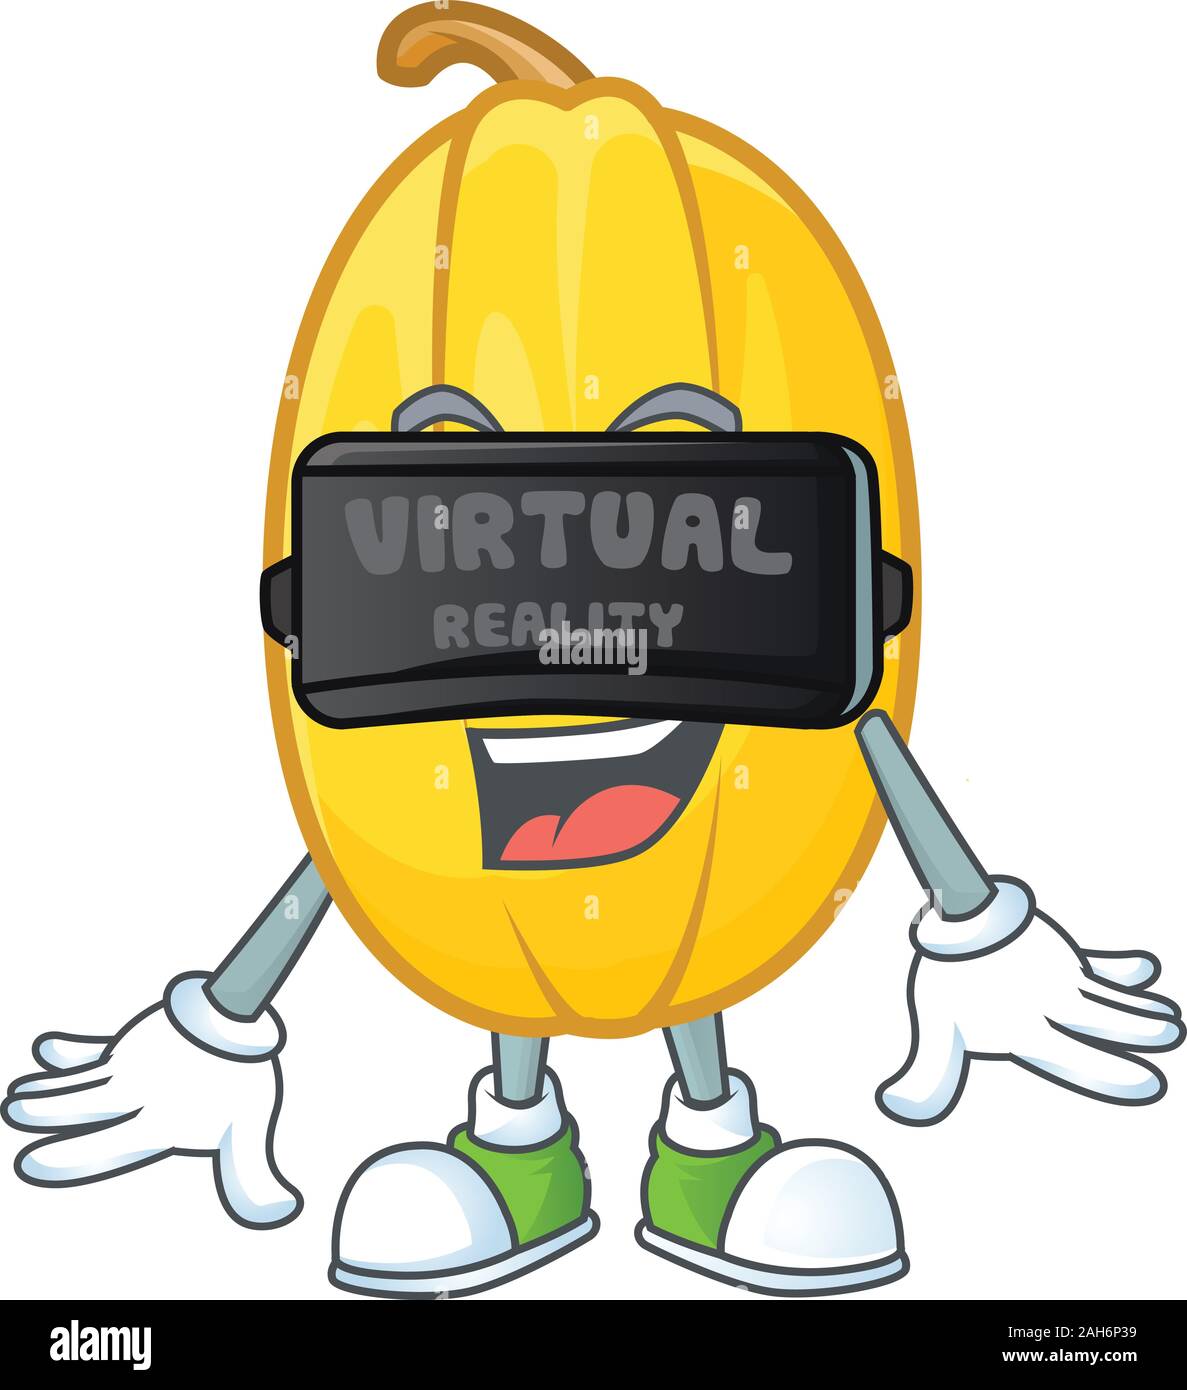 https://c8.alamy.com/comp/2AH6P39/cool-spaghetti-squash-character-with-virtual-reality-headset-2AH6P39.jpg